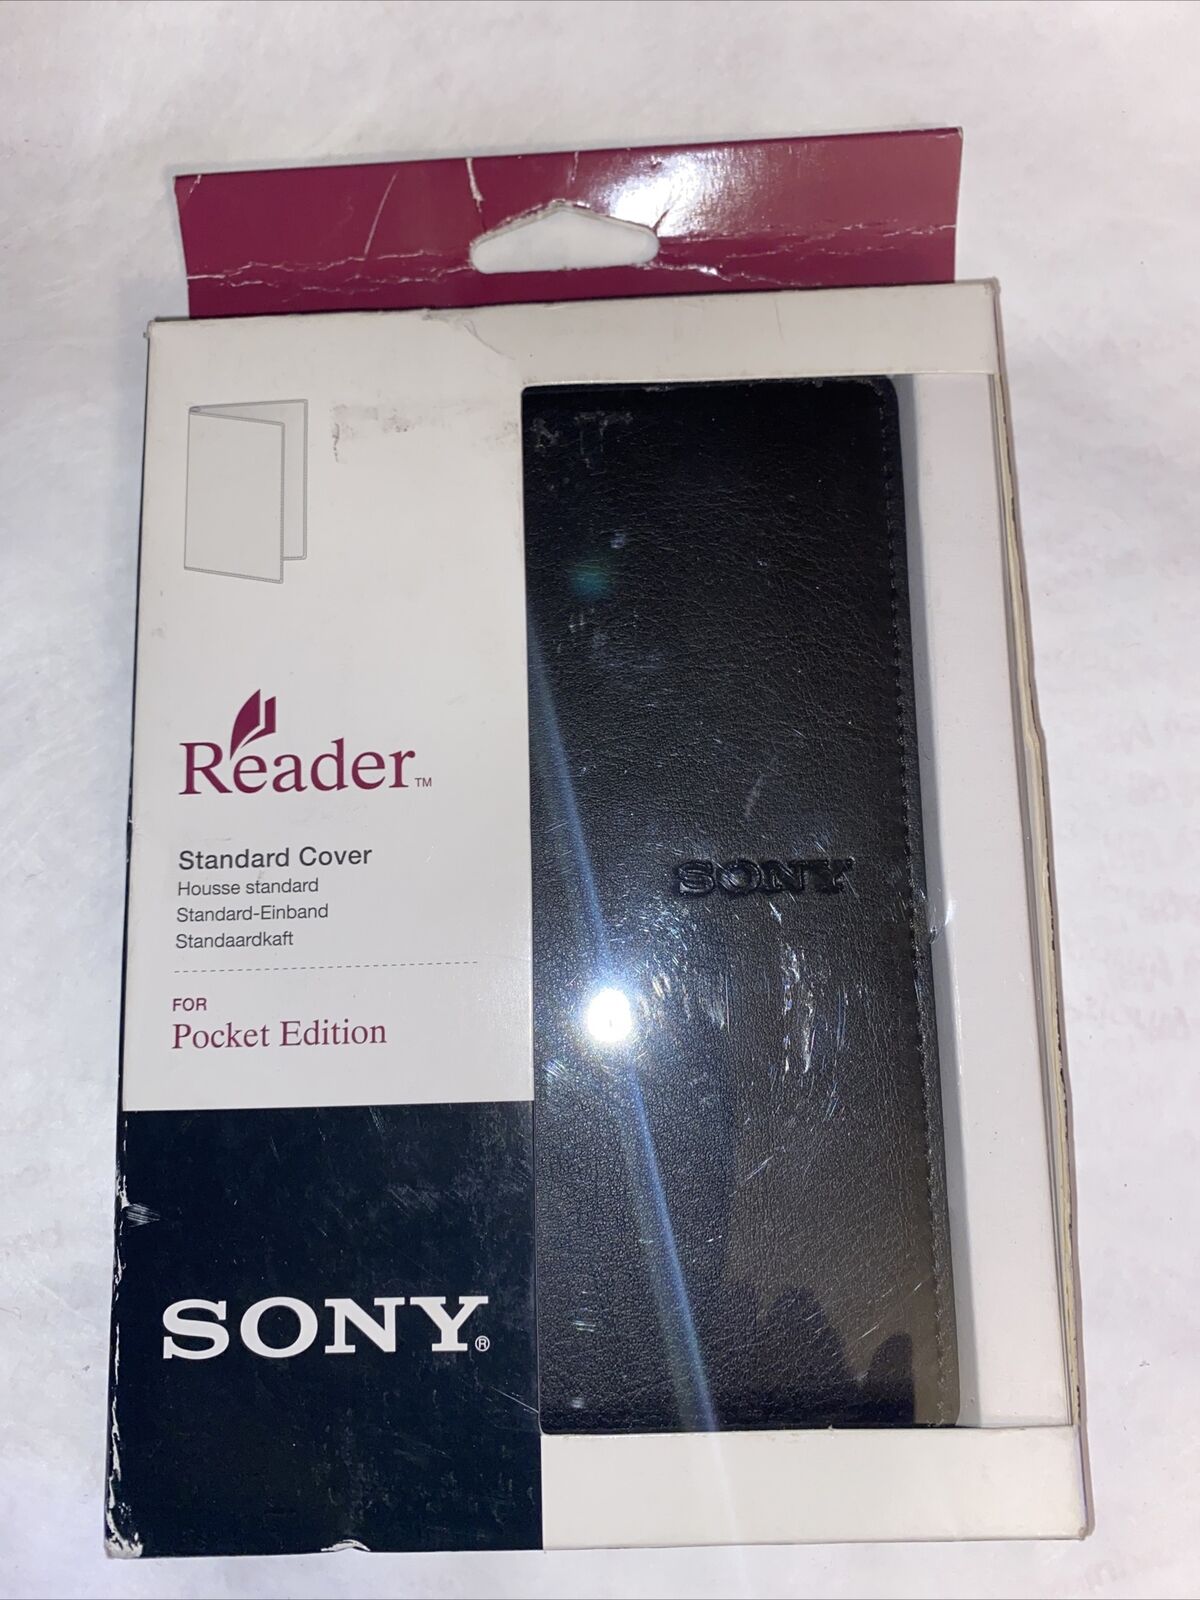 New in Box Genuine Sony Reader Pocket Edition Standard Cover Vintage 2009 Black